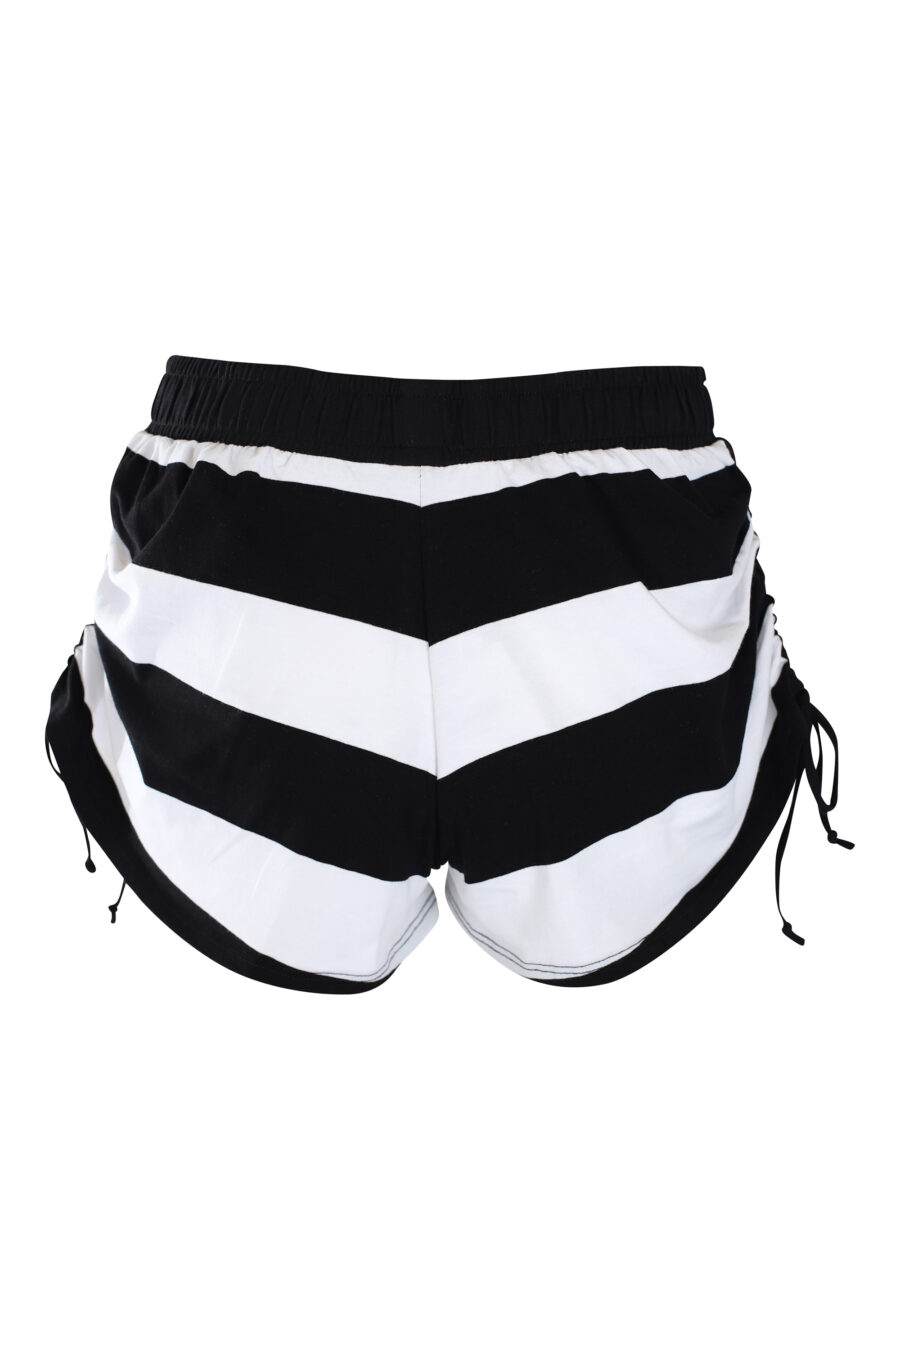 Bicolour black and white striped shorts with gold mini-logo - IMG 2248